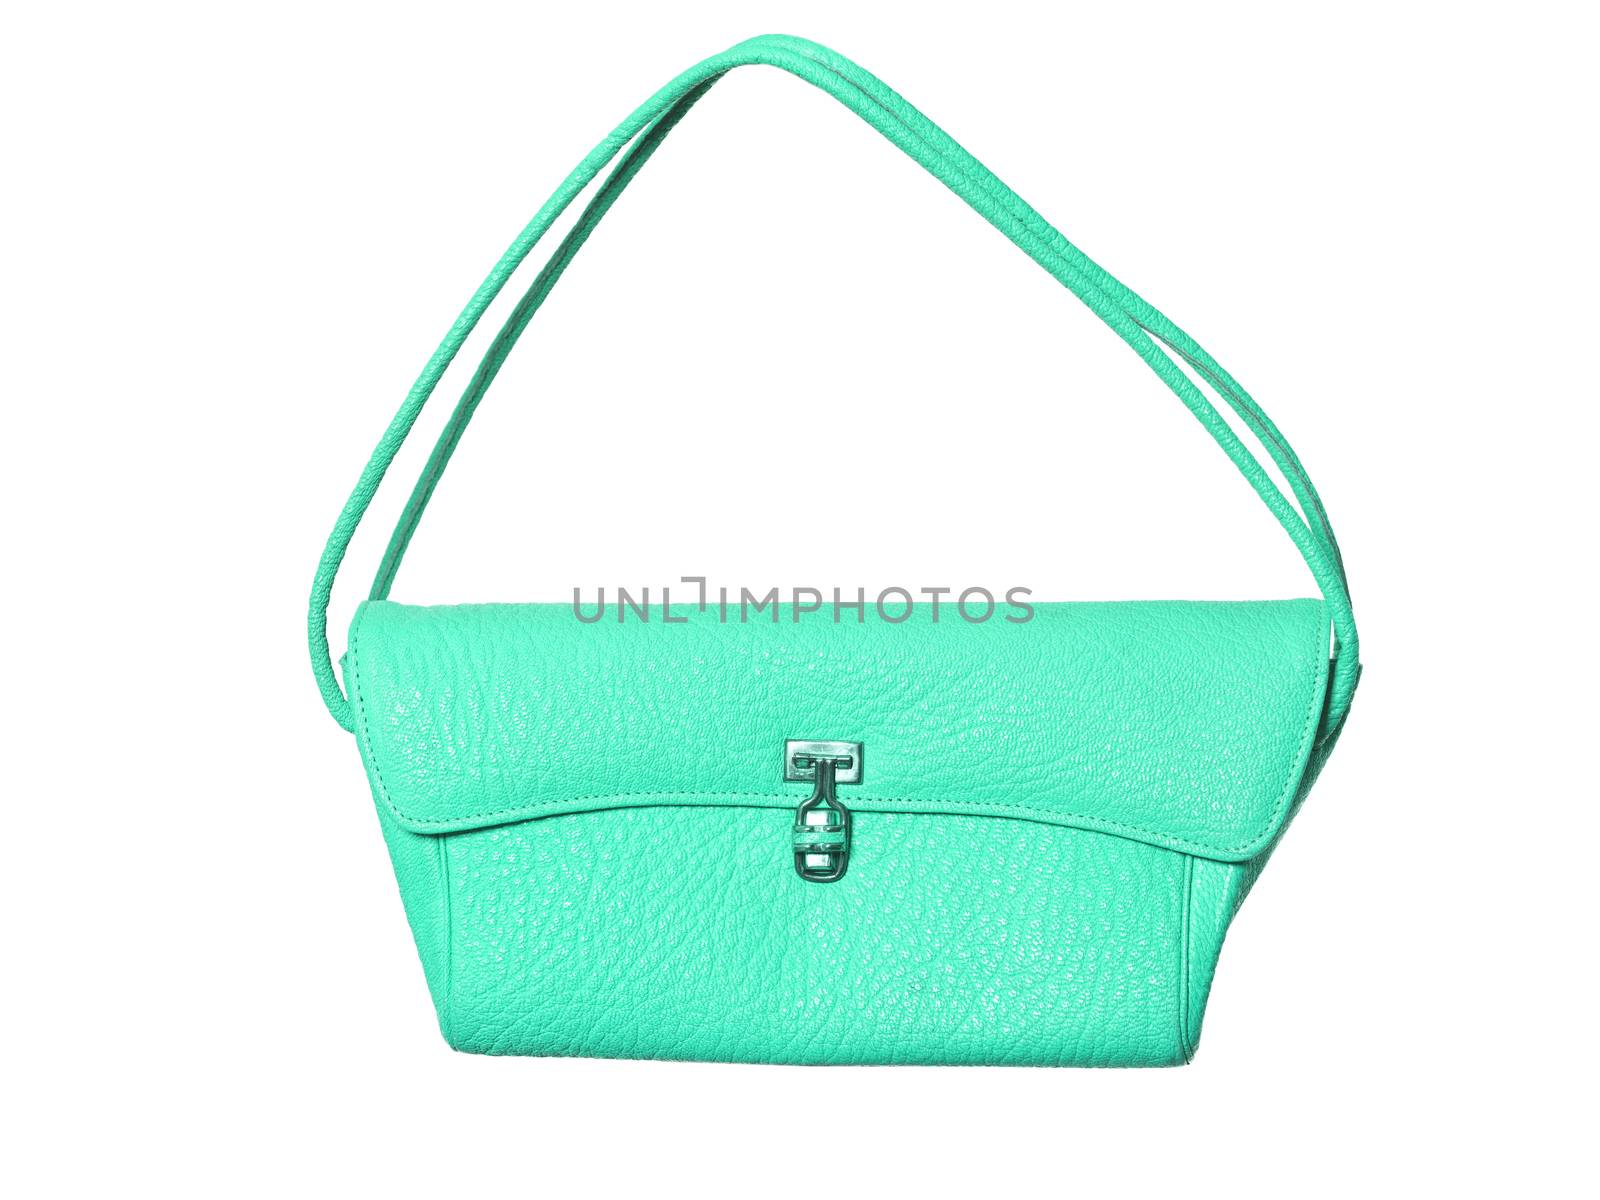 Turquoise purse isolated on white background